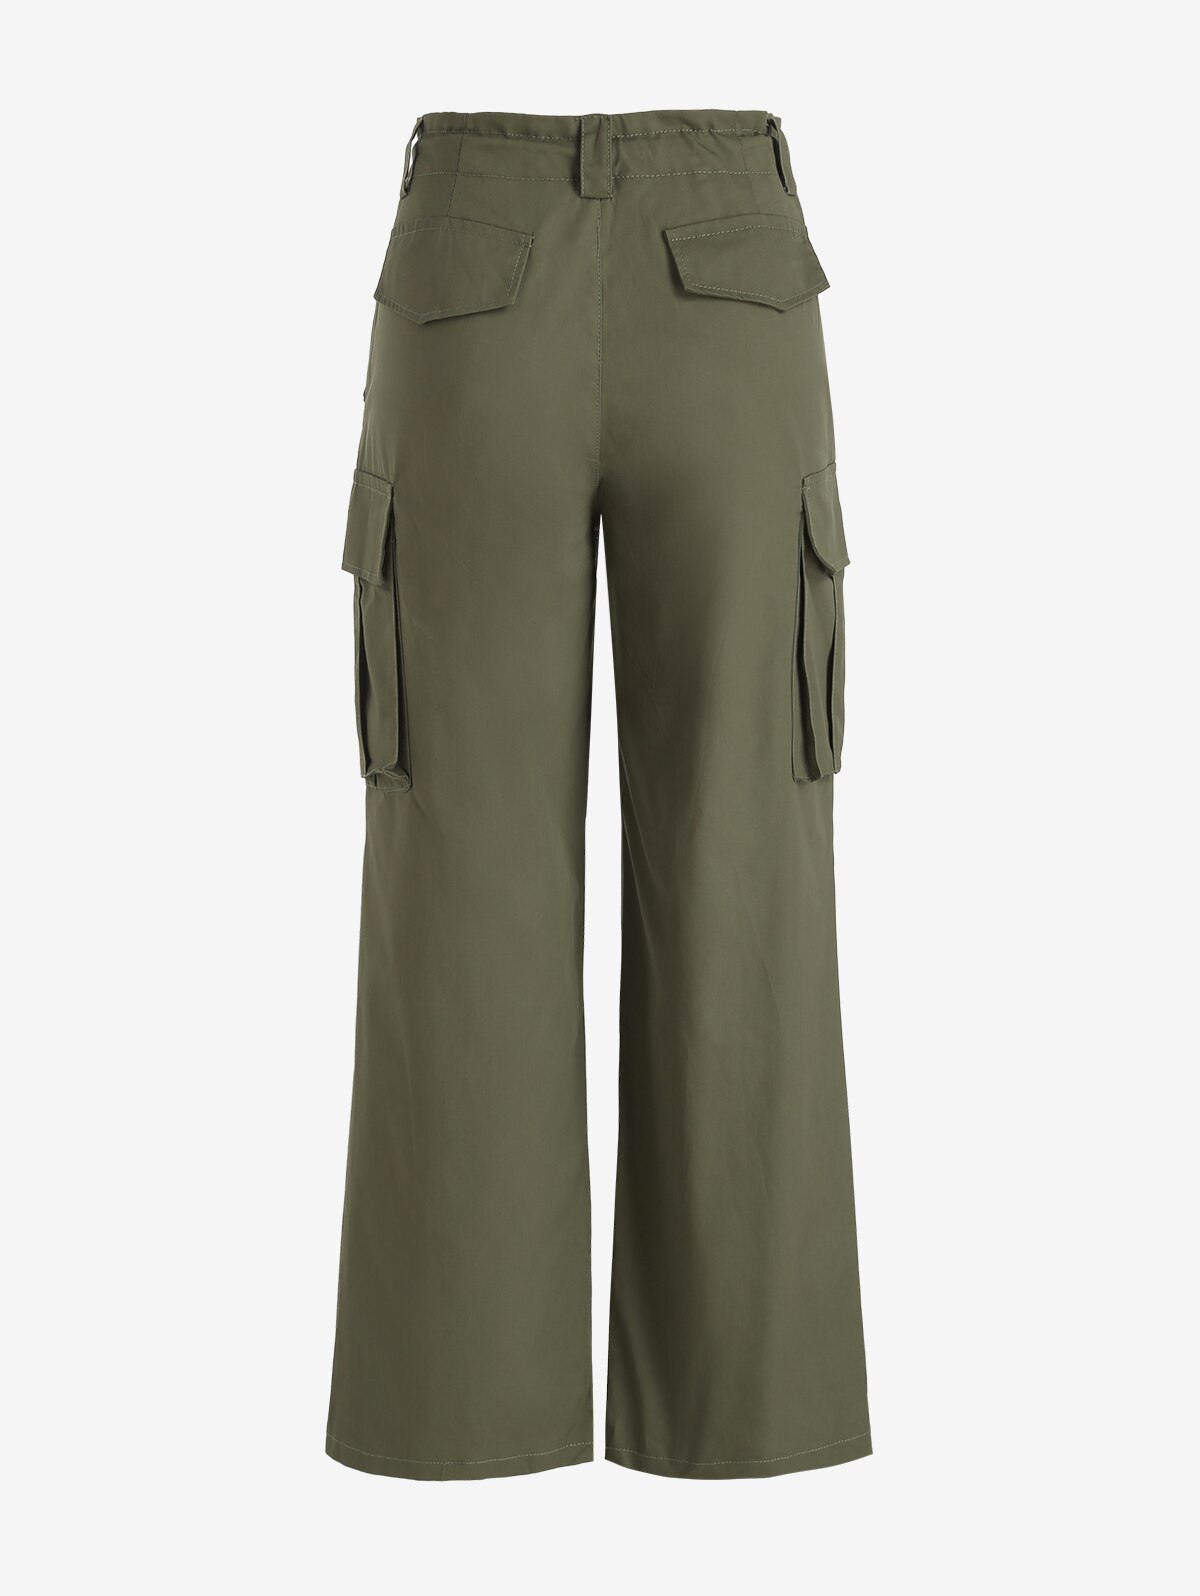 ZAFUL Pockets Drawstring Straight Cargo Pants Women Solid Parachute Trousers Y2K Fashion Streetwear pantalones de mujer 2 - Parachute Pant Shop